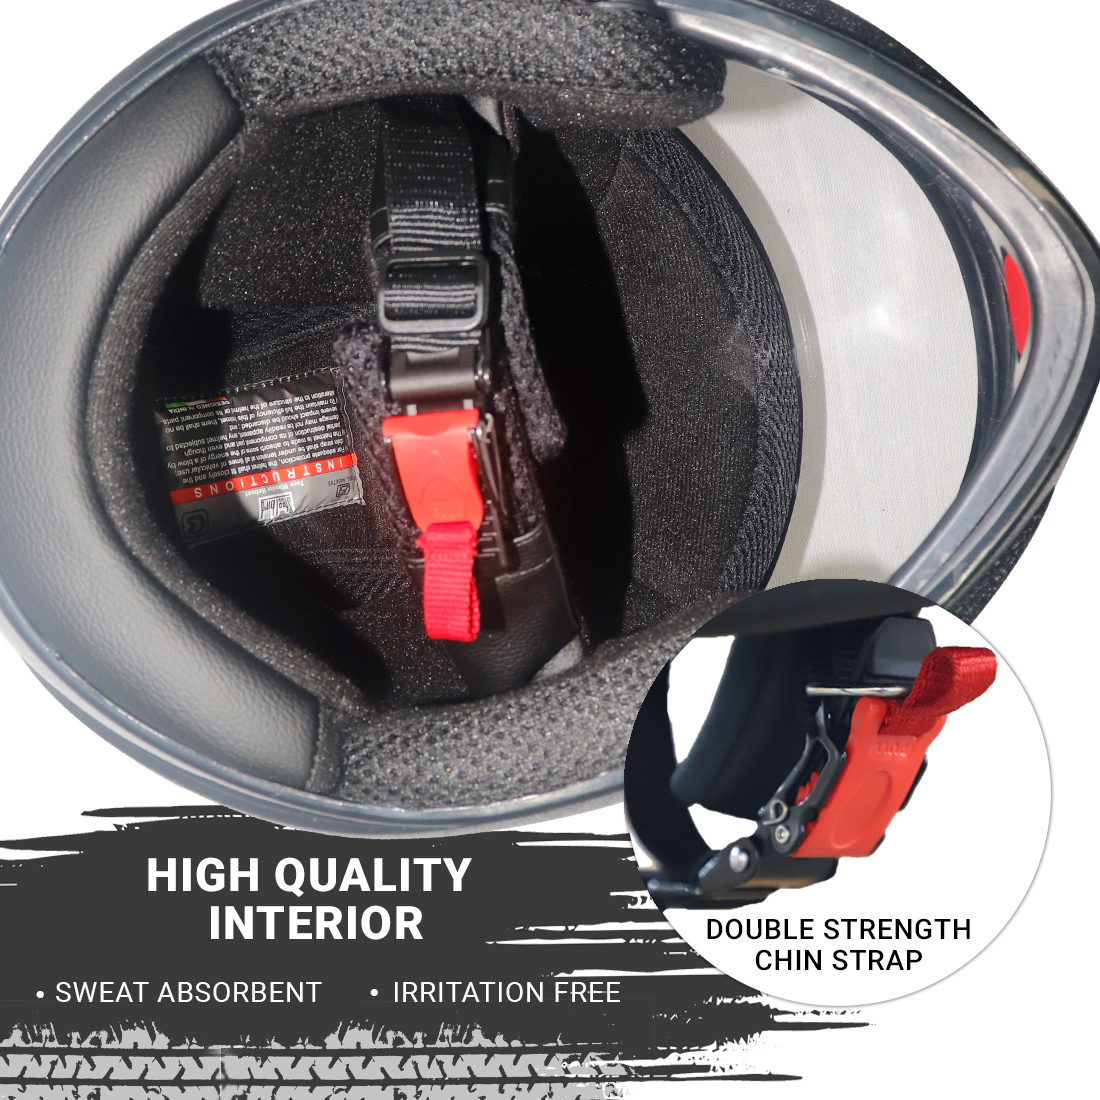 Steelbird SB-45 R2K Oska ISI Certified Flip Up Helmet (Red With Smoke Visor)